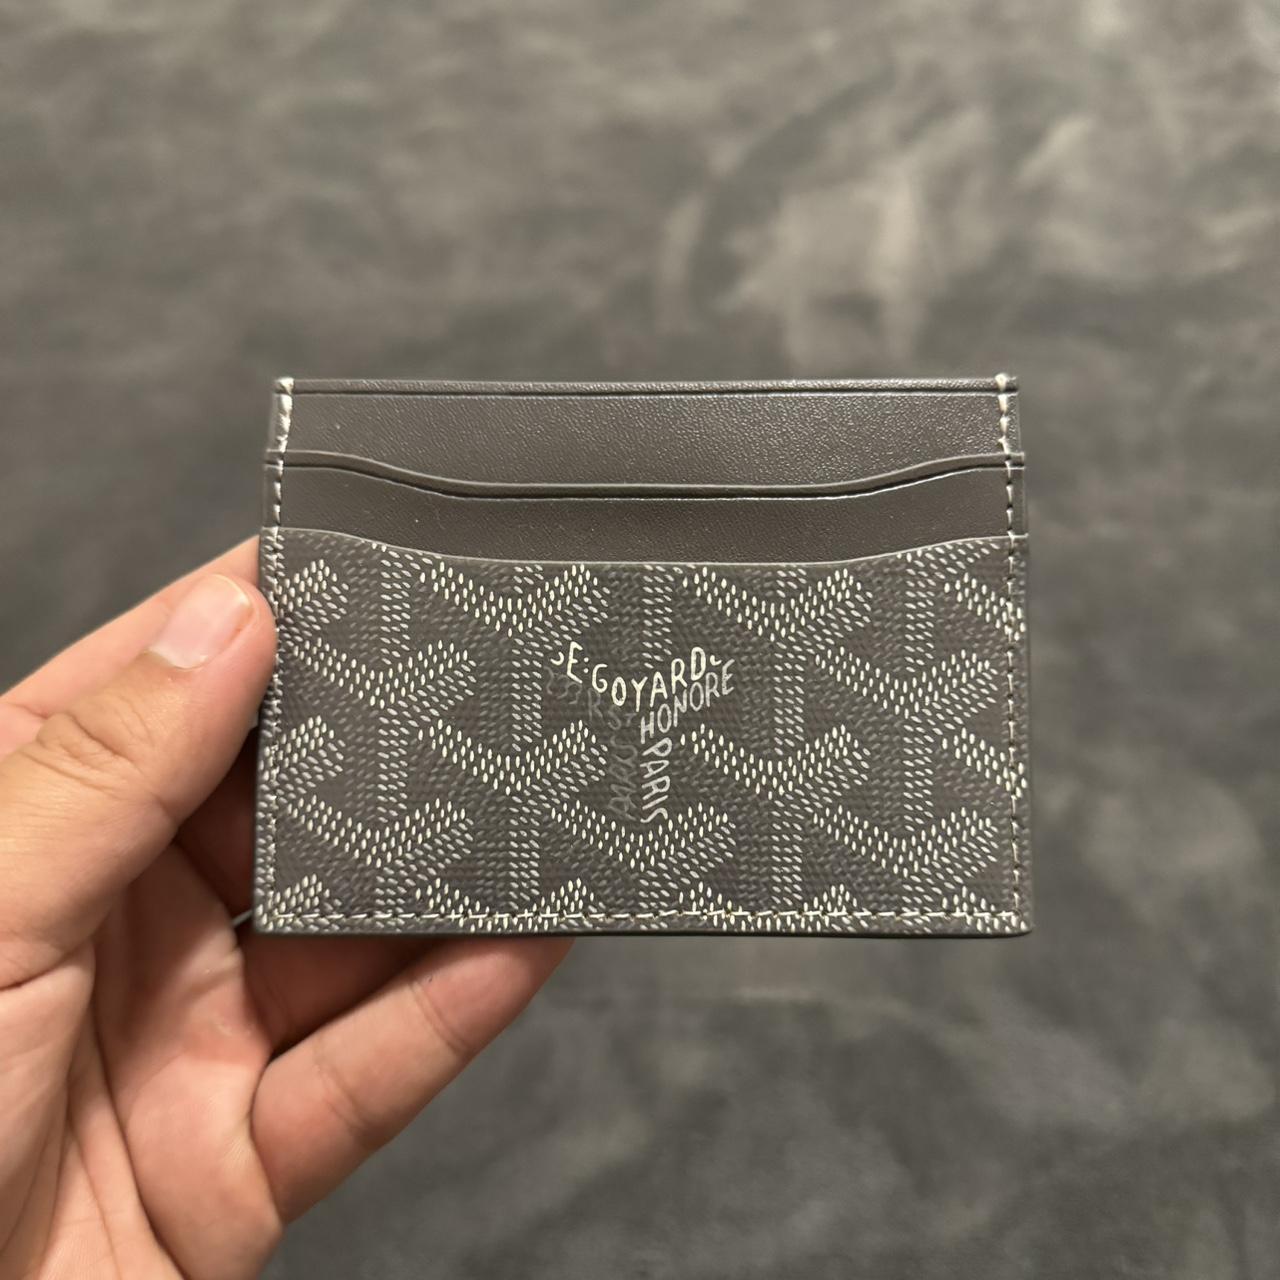 Brand new, never used Goyard Matignon PM wallet in - Depop